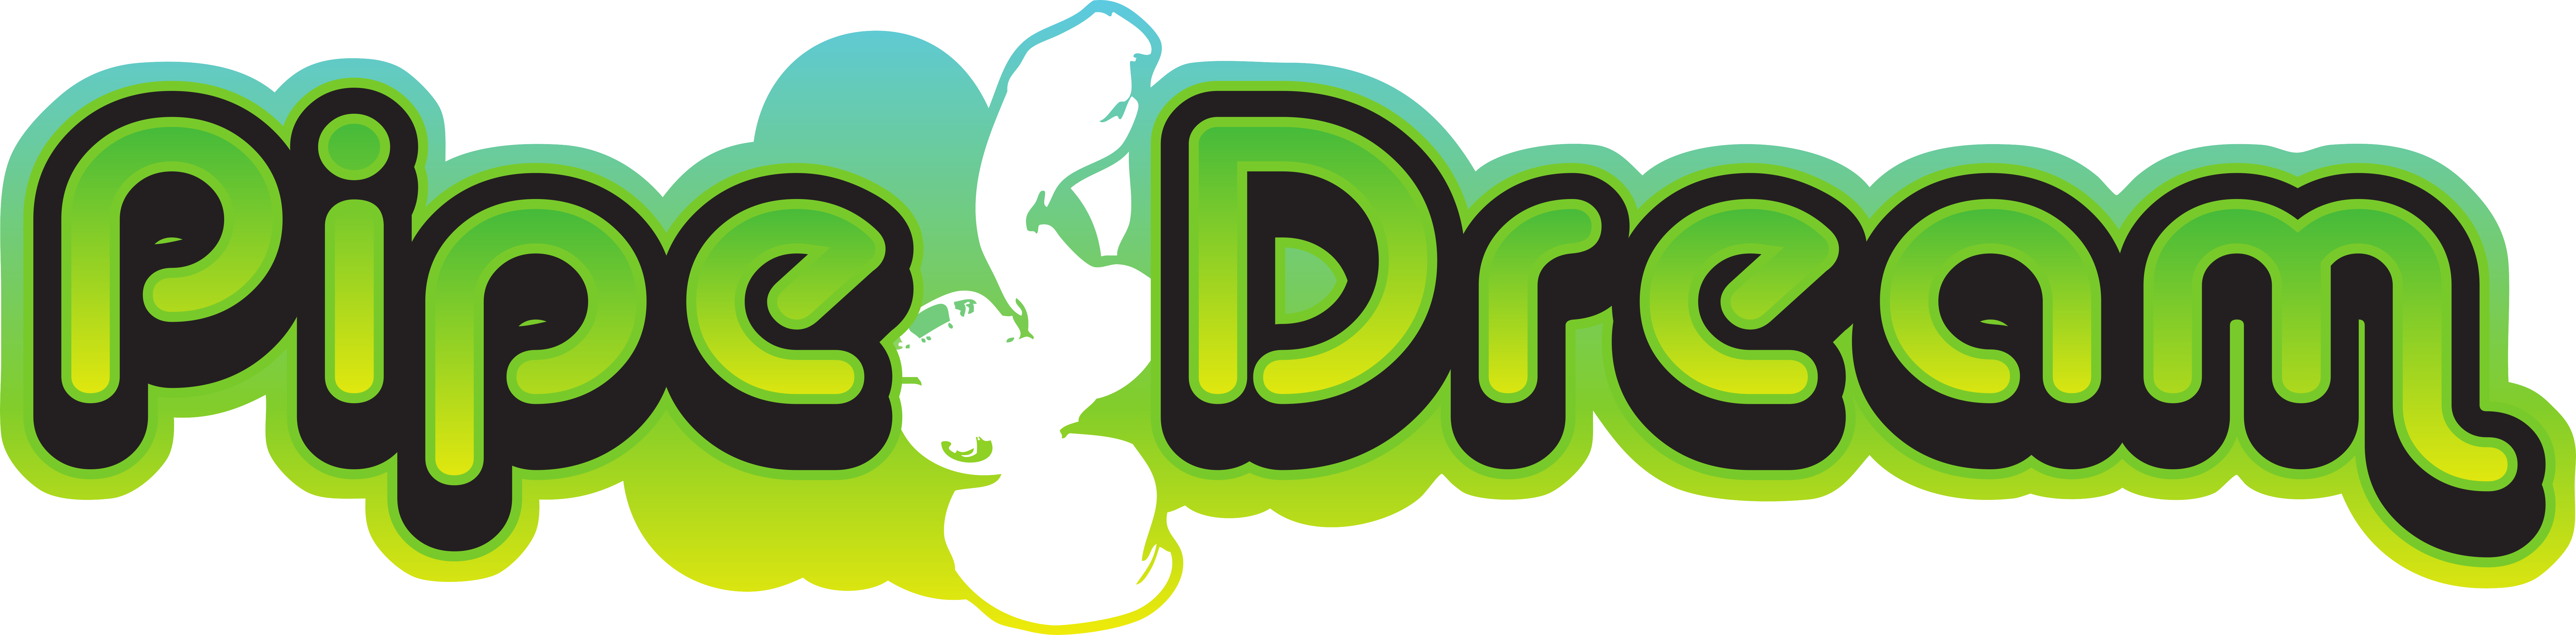 pipedream logo